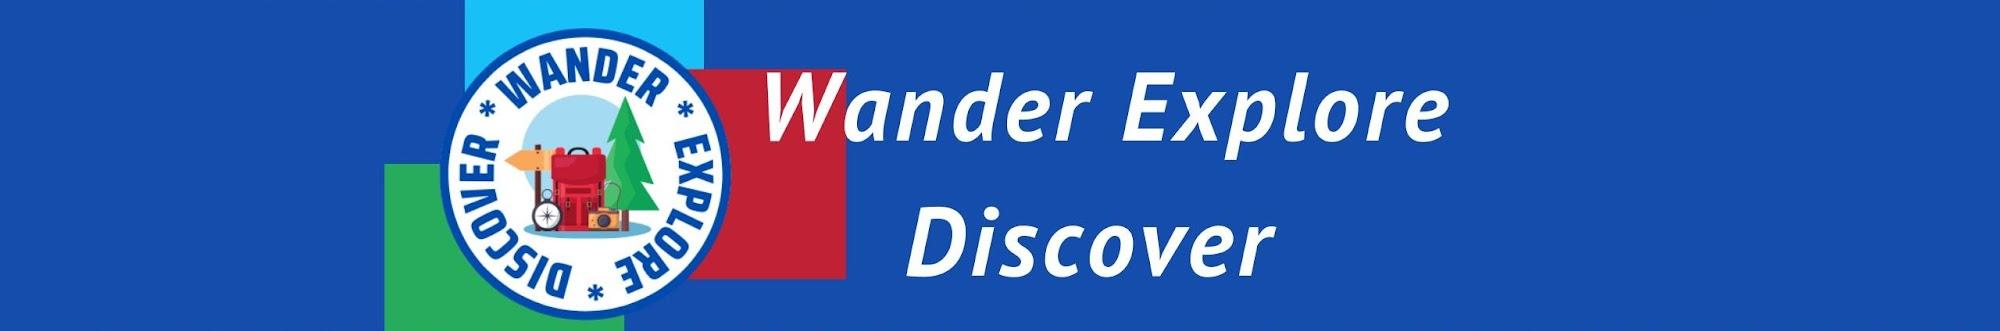 Wander Explore Discover